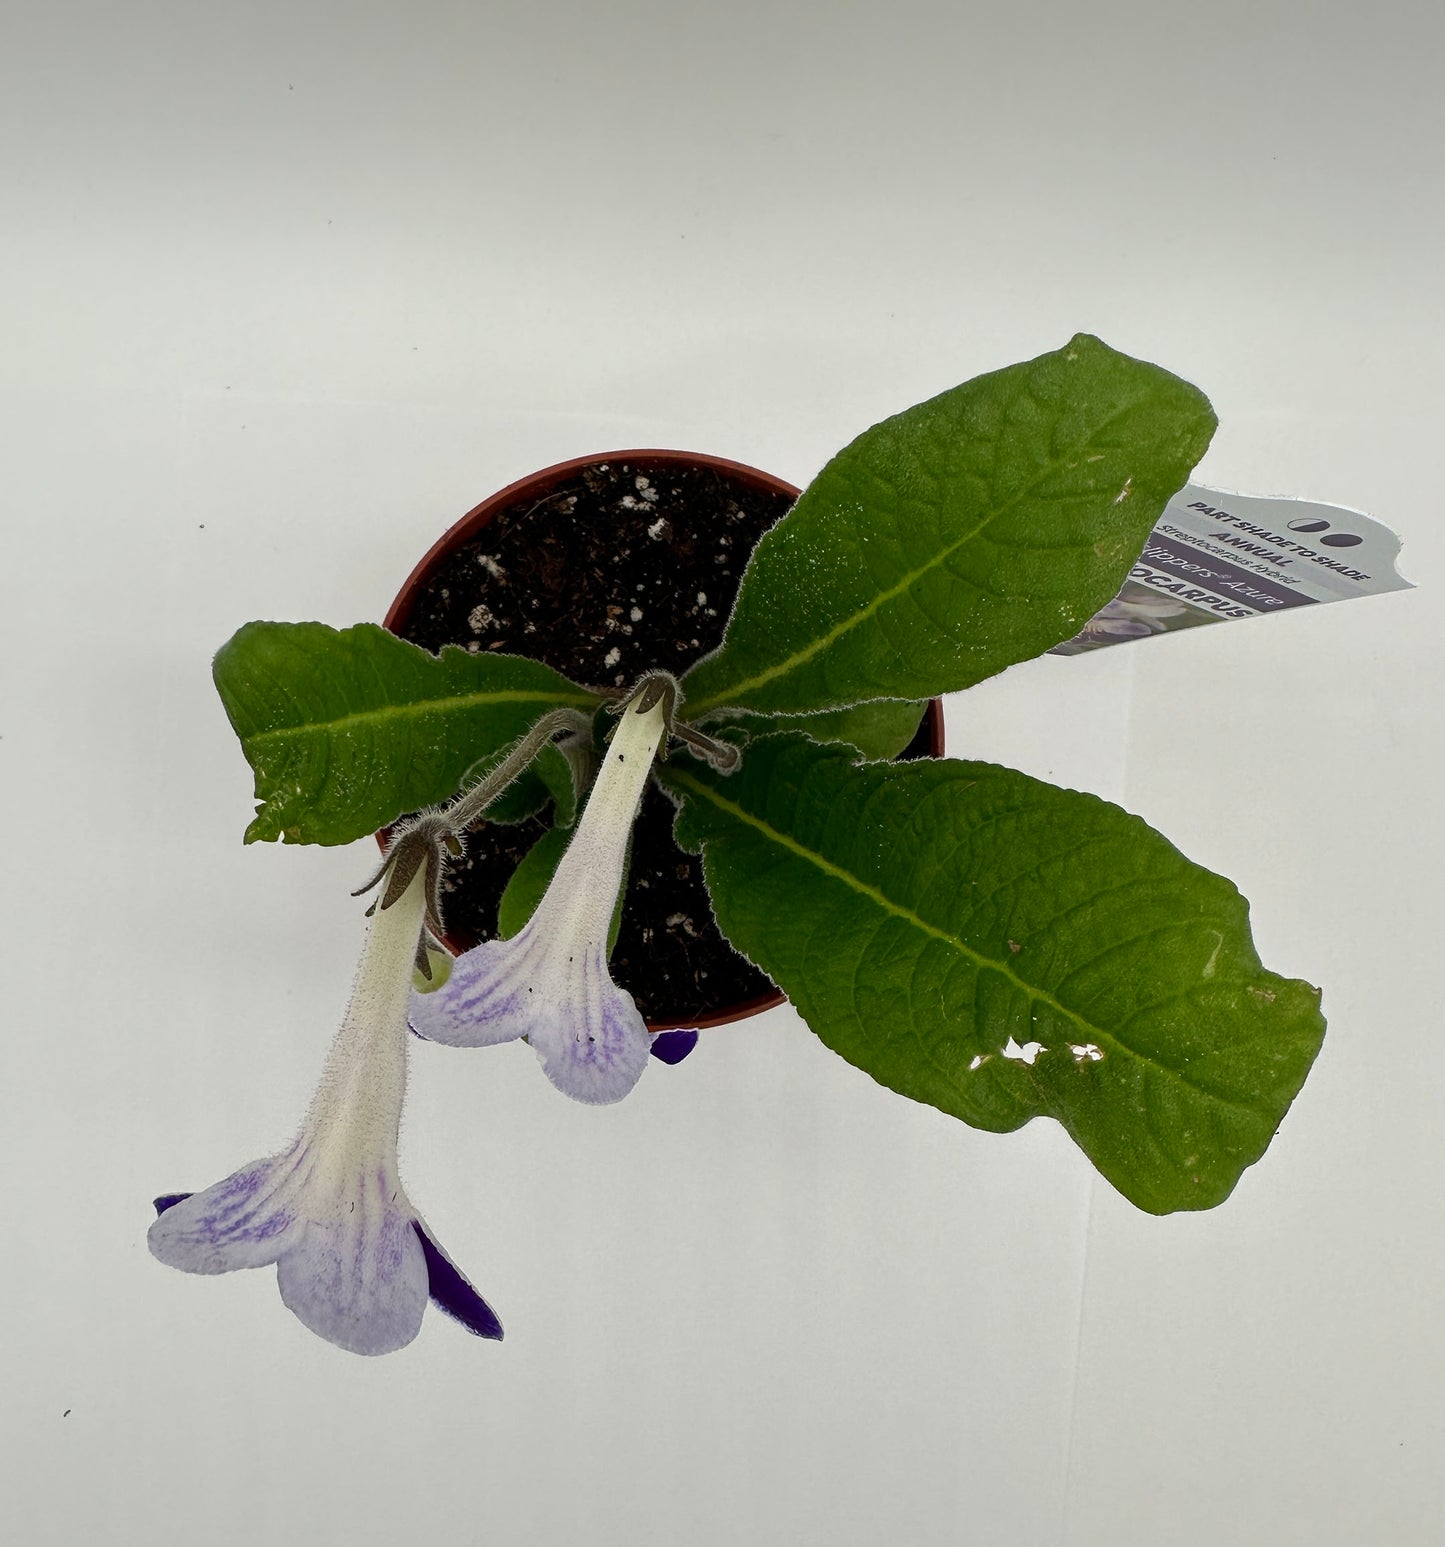 Azure Streptocarpus Ladyslipper (Cape Primrose) Live Plant in 4" nursery pot